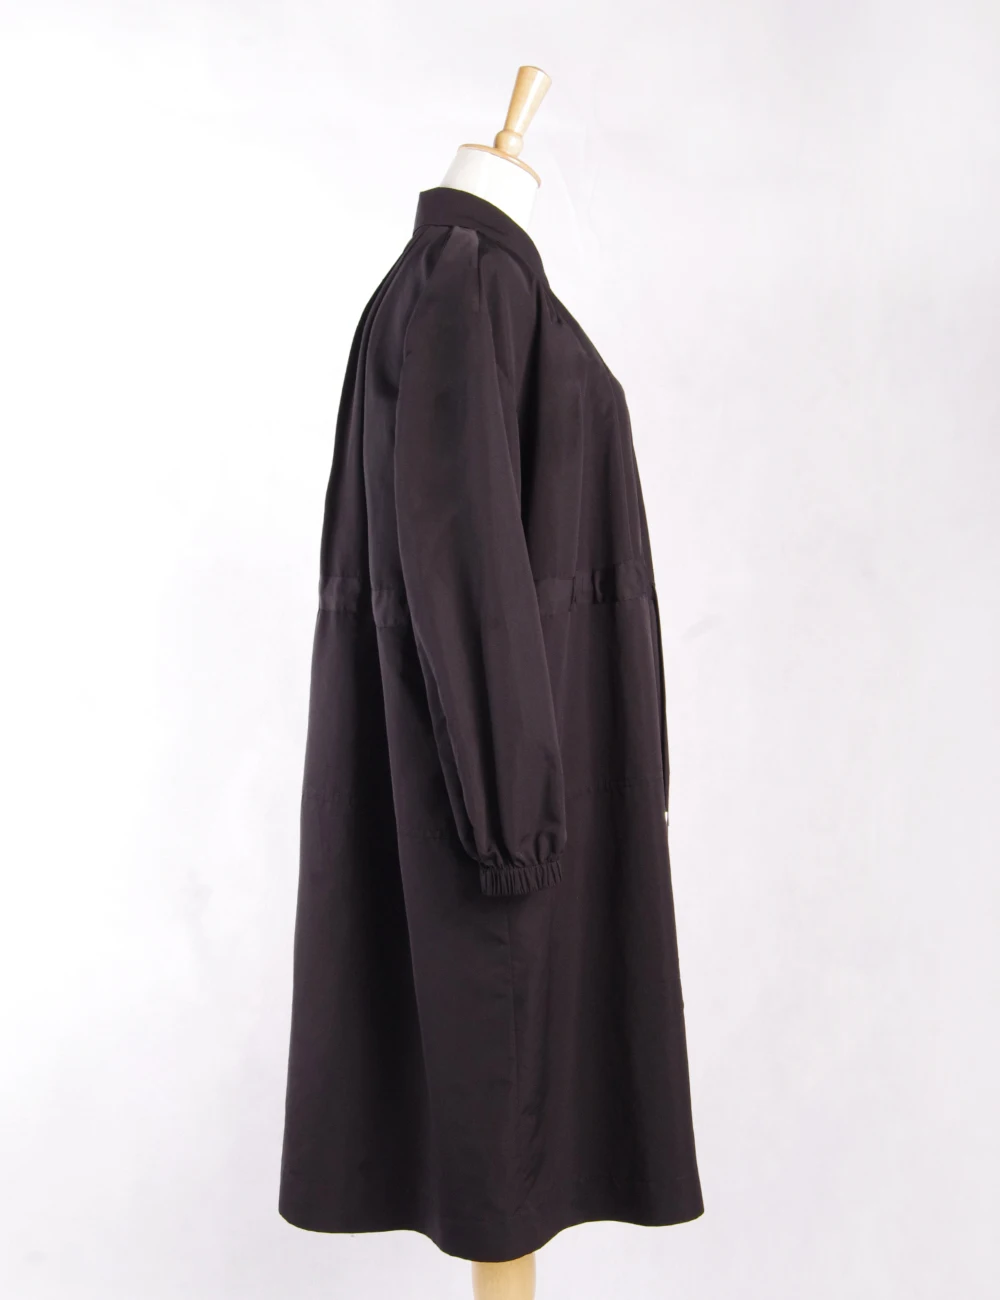 Black Cloak Gothic Dark Mysterious Halloween Costumes Trench Coat - Buy ...